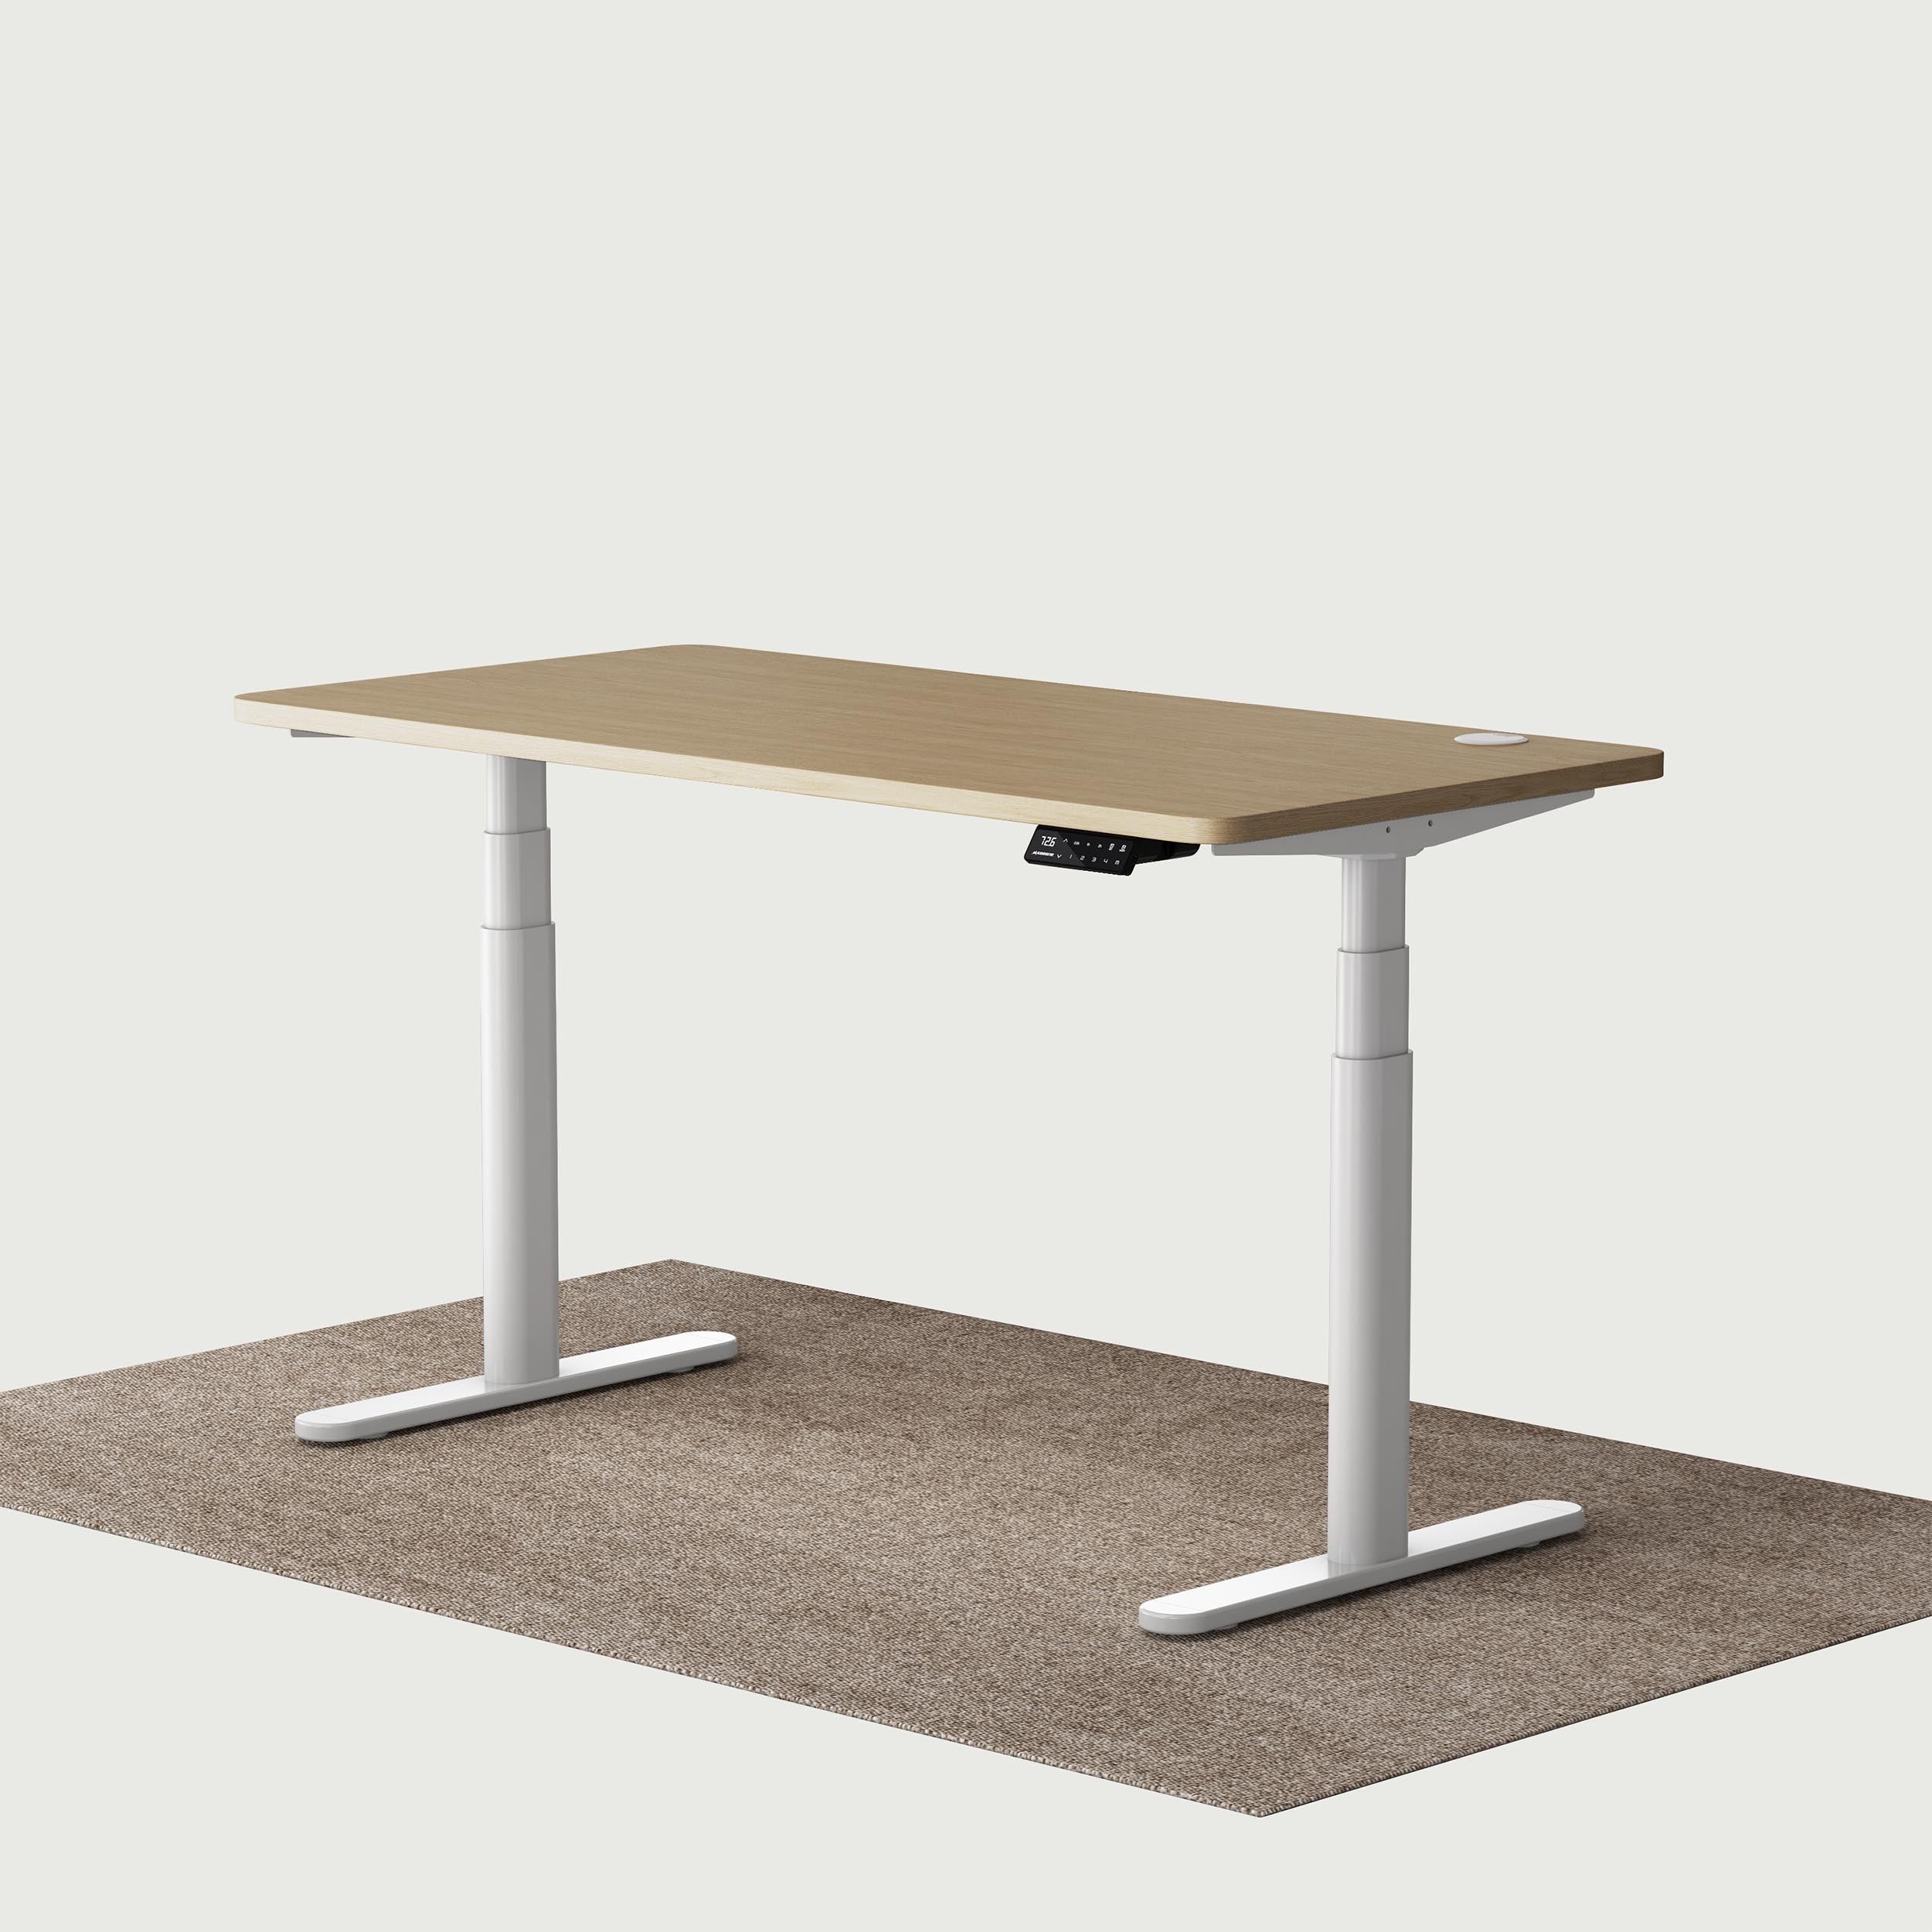 TH2 Pro Plus white oval electric standing desk frame with oak 140x70 cm desktop